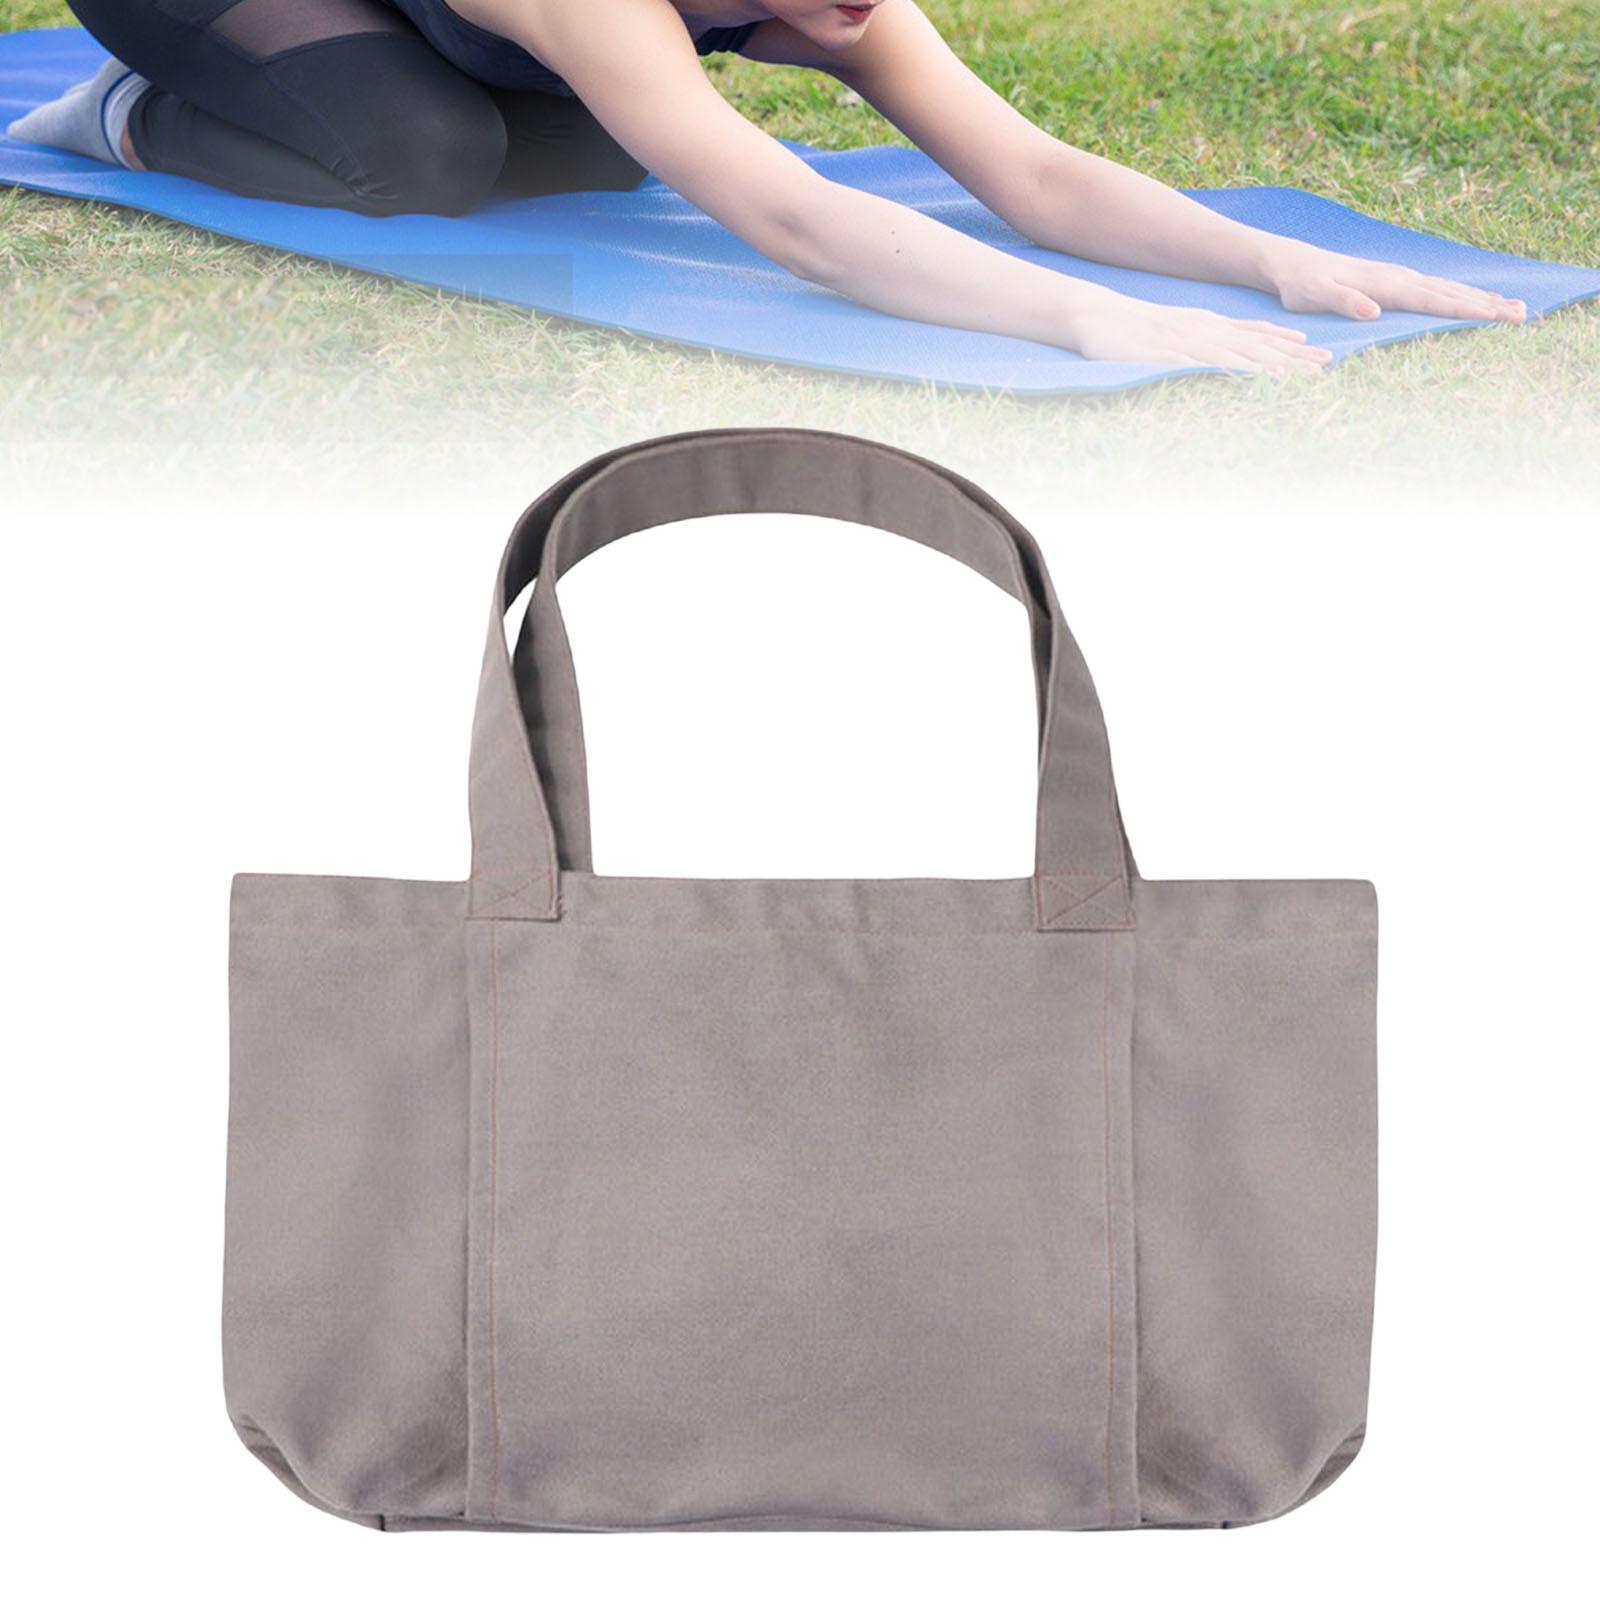 Women Yoga Bag Mat Carriers Portable Shoulder Bag for Beach Gym Workout Gray